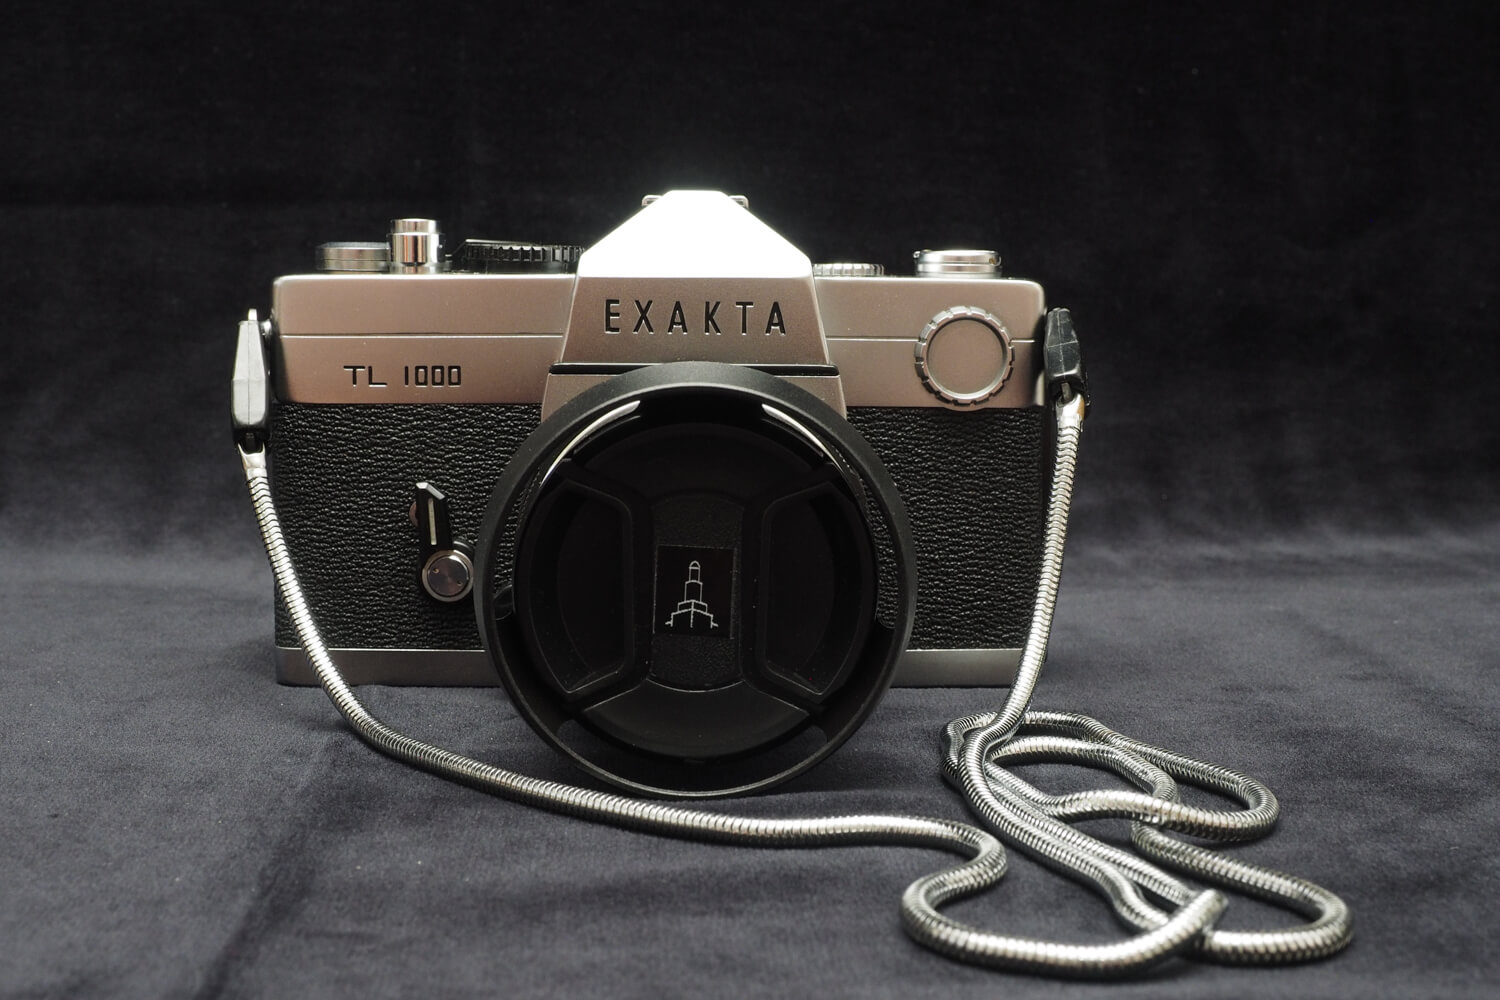 Exakta TL 1000 camera with Pentacon "Electric" 29mm f/2.8 lens